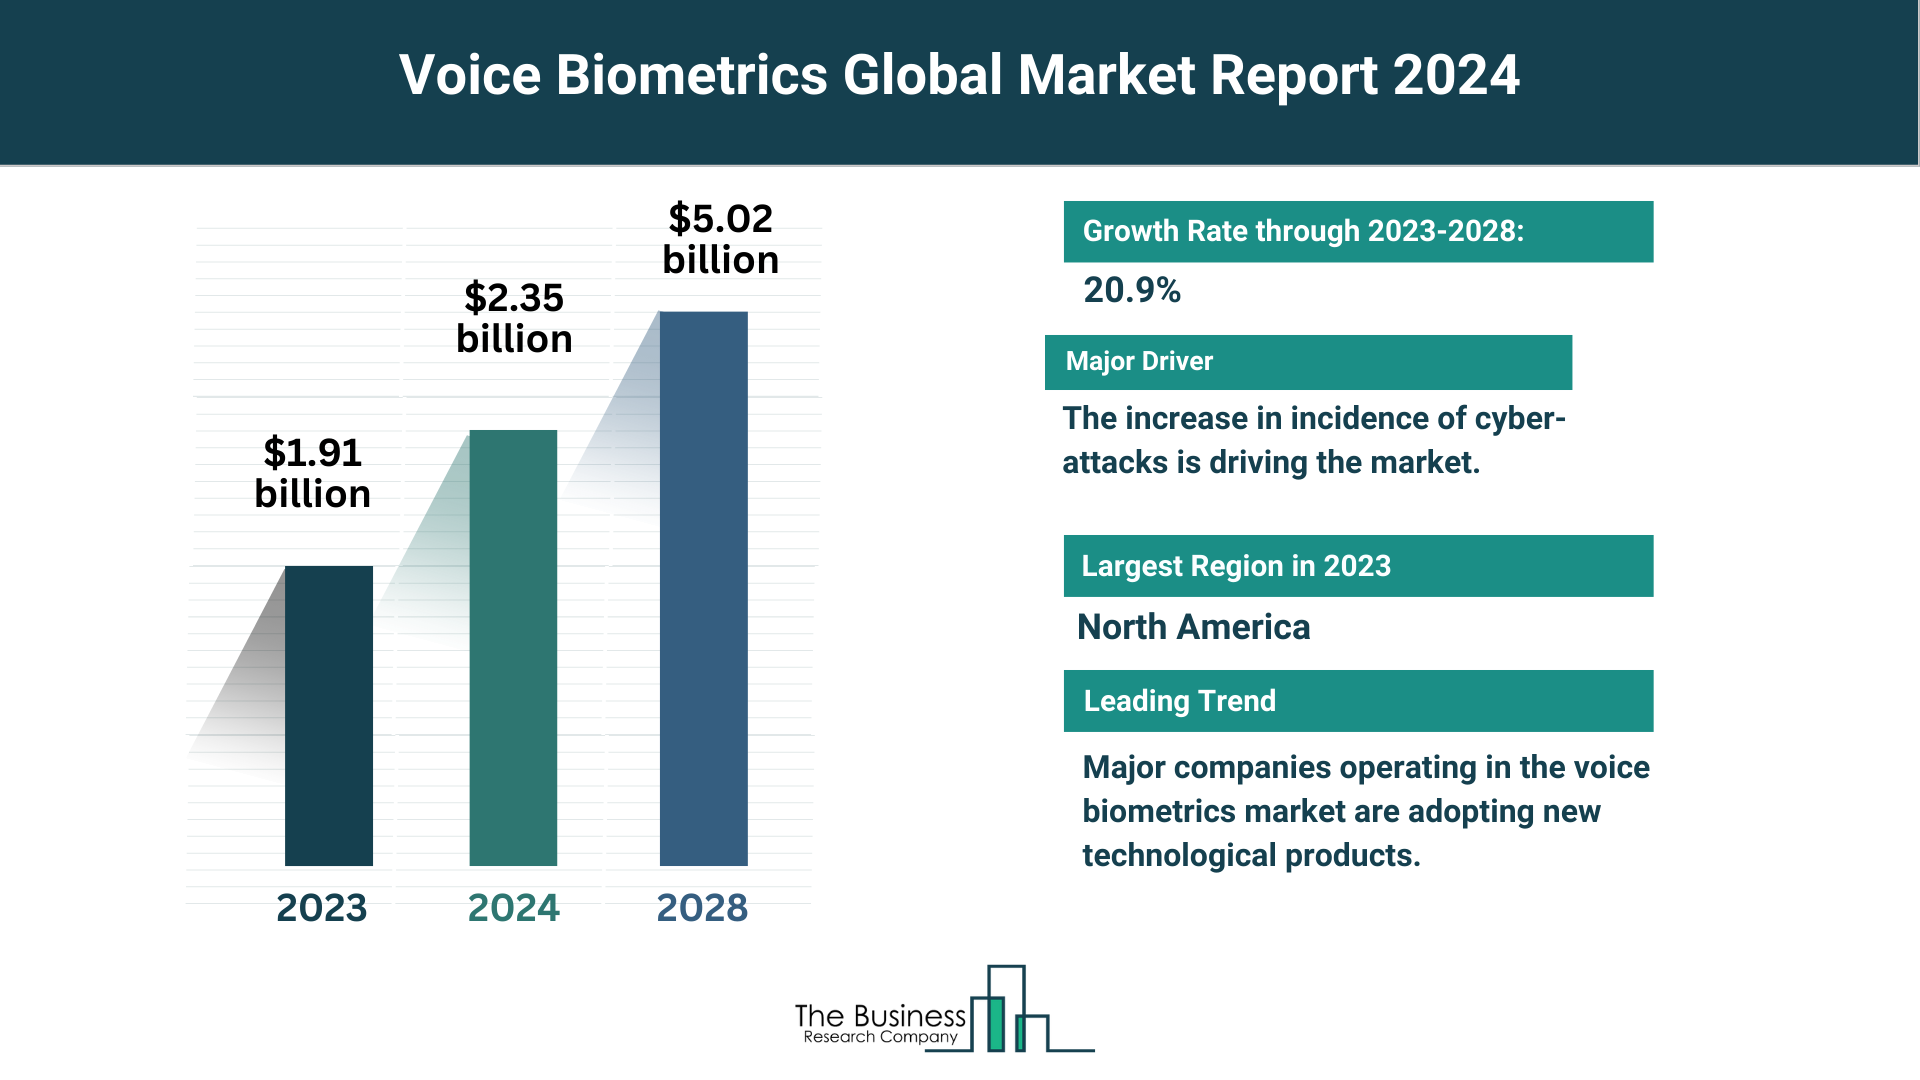 Global Voice Biometrics Market